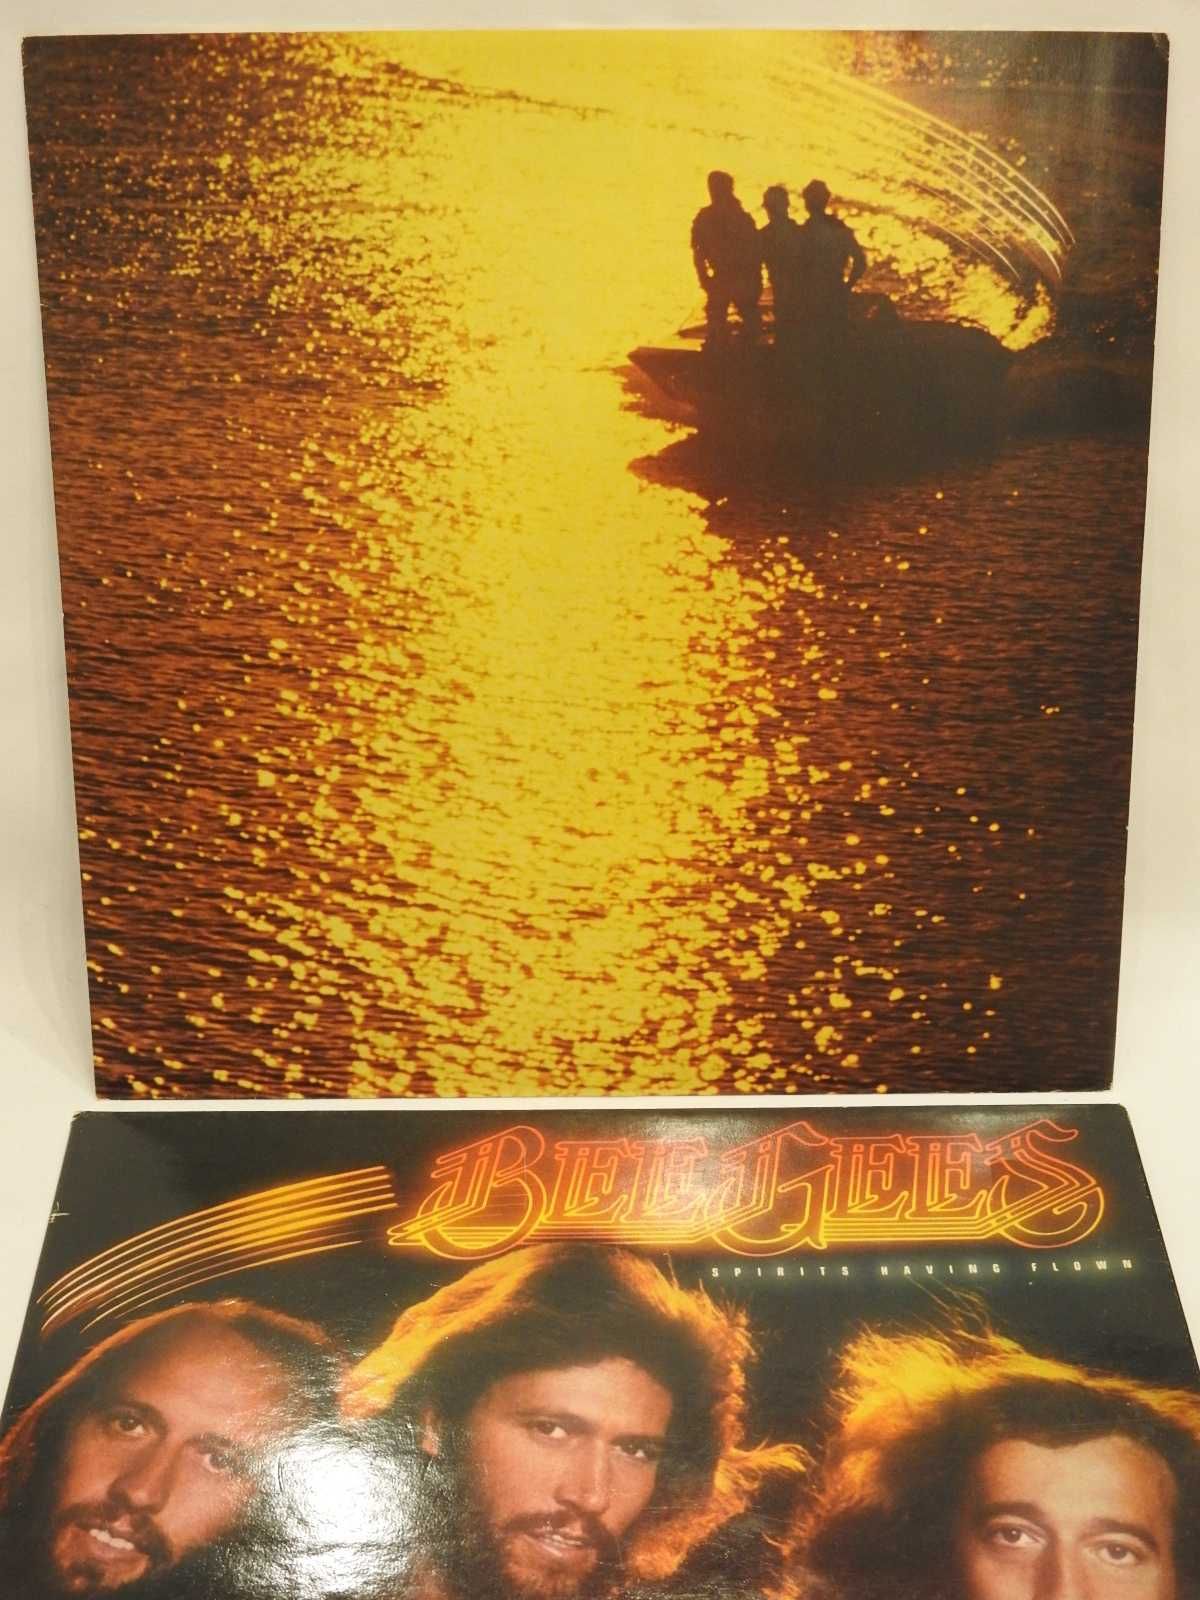 Bee Gees Spirits Having Flown LP пластинка 1979 Британия UK EX 1 press